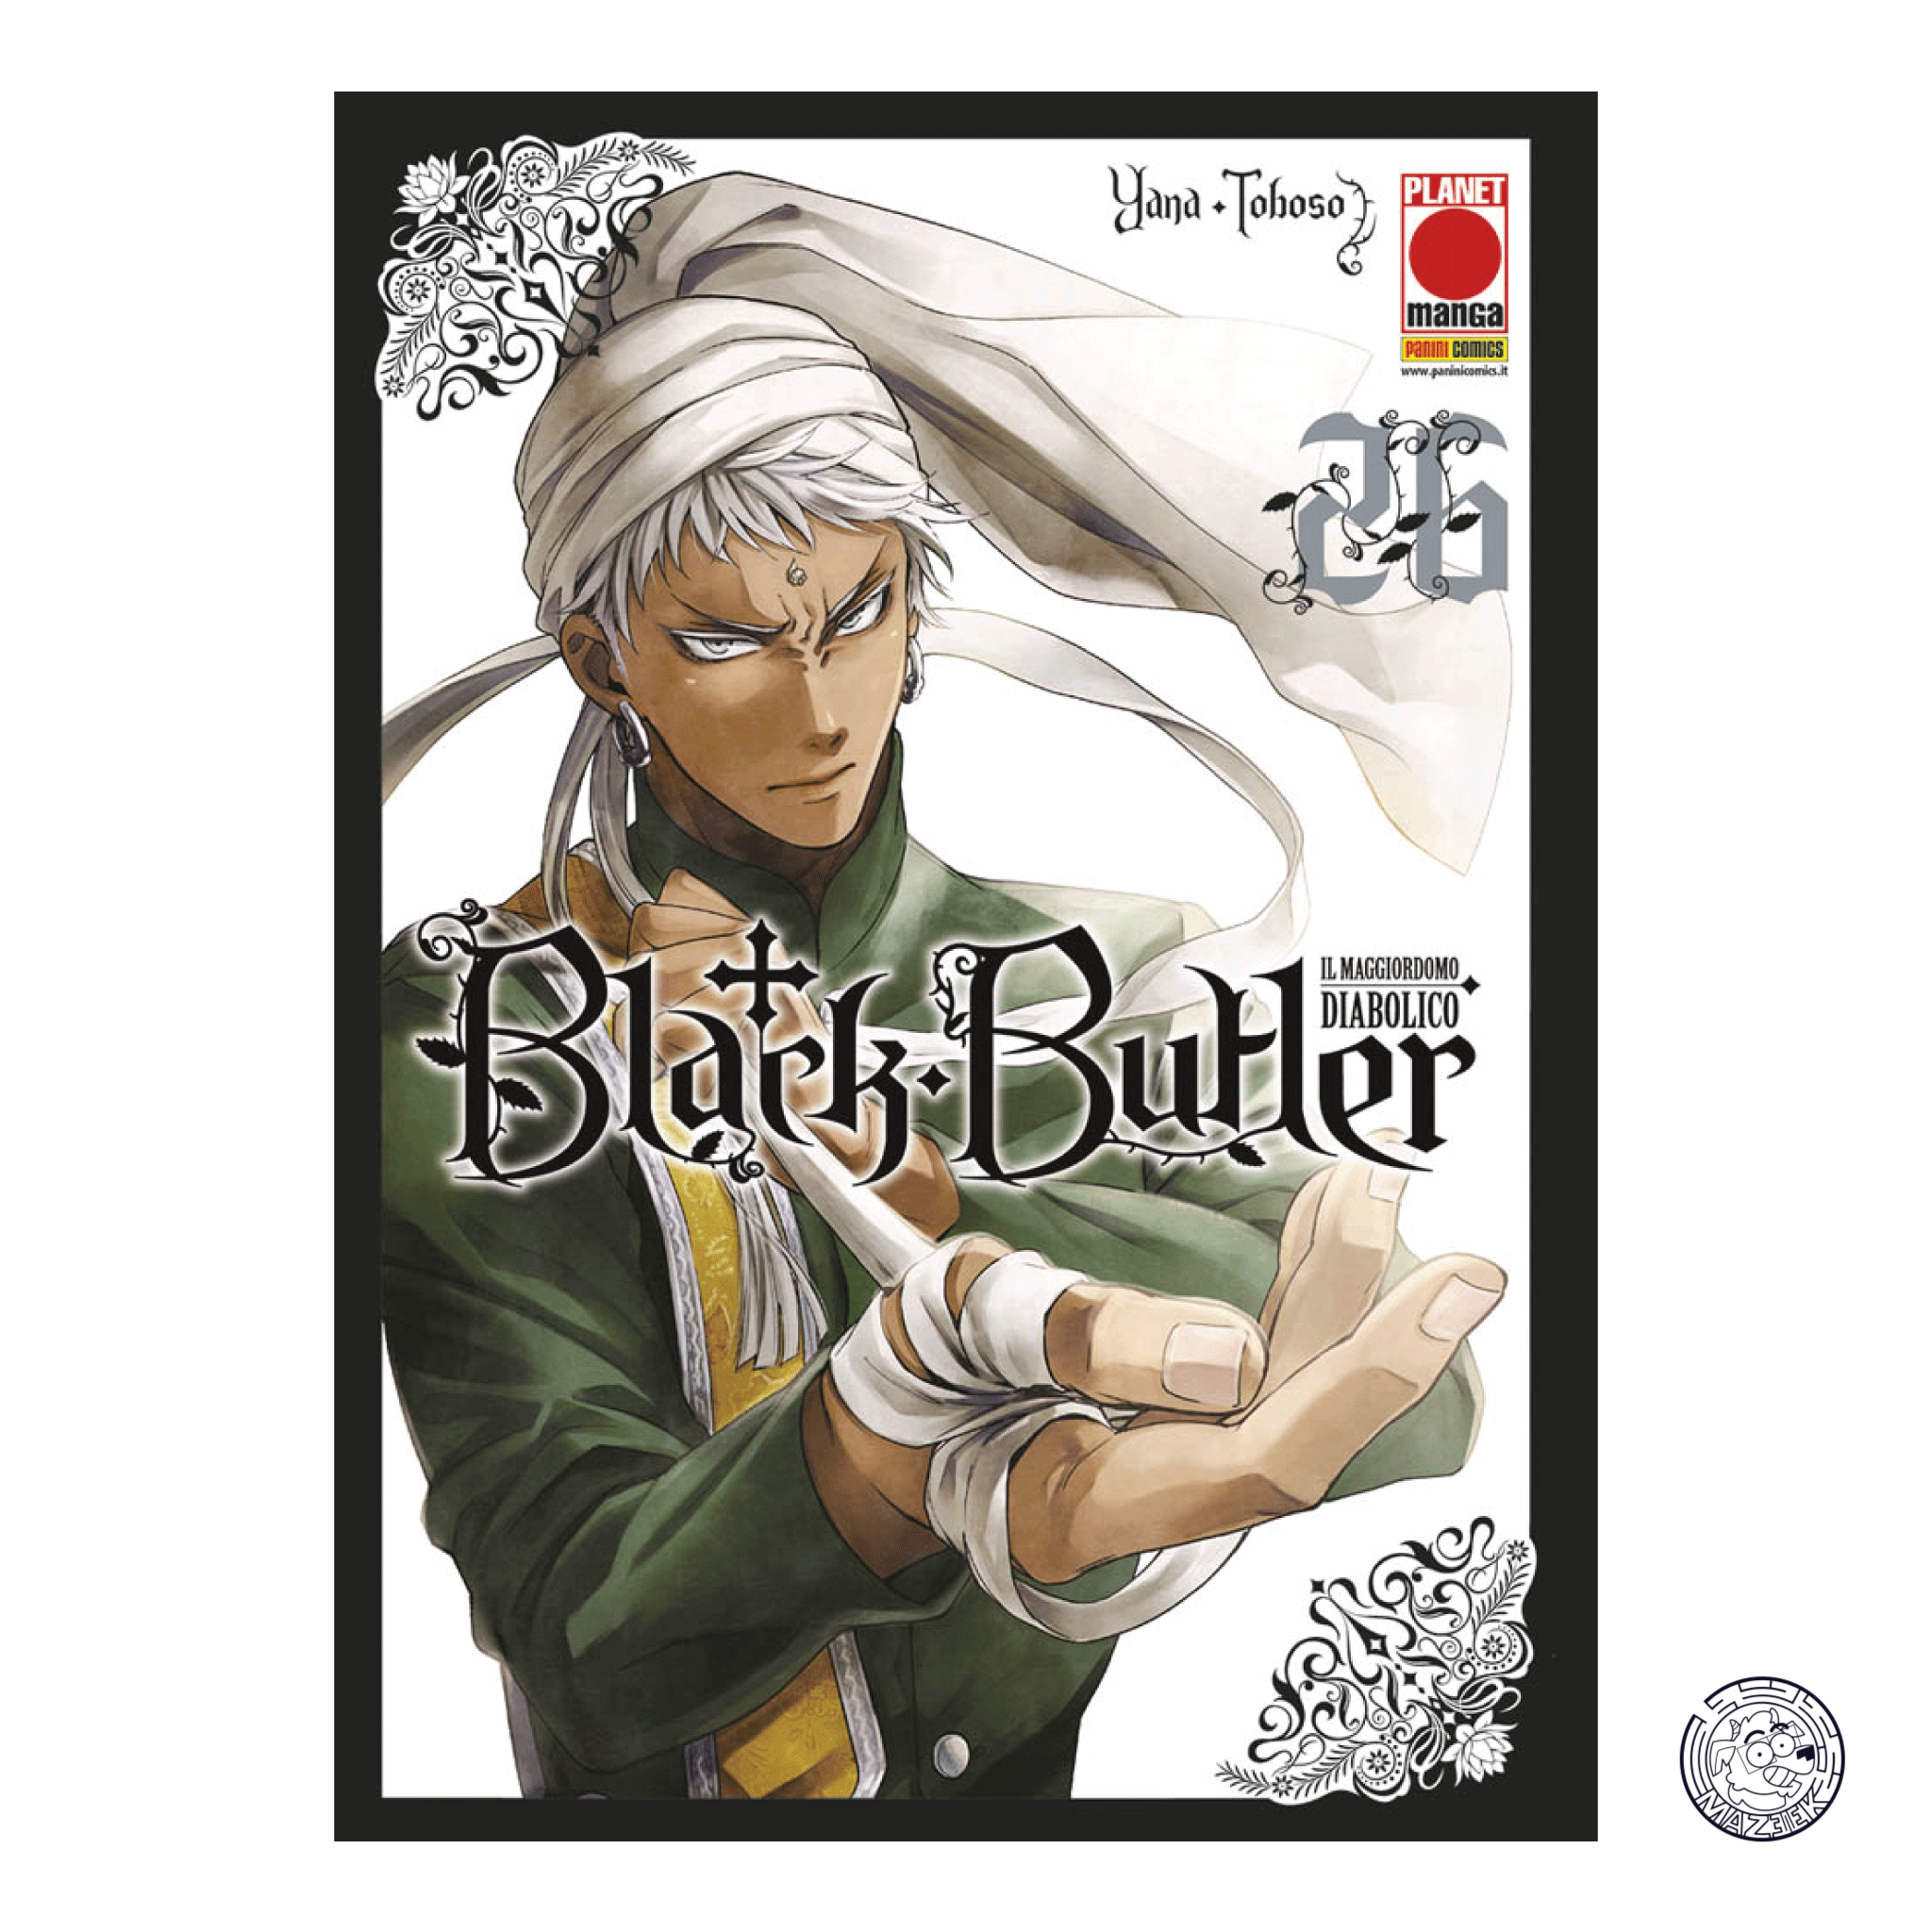 Black Butler - the Evil Butler 26 - Reprint 1